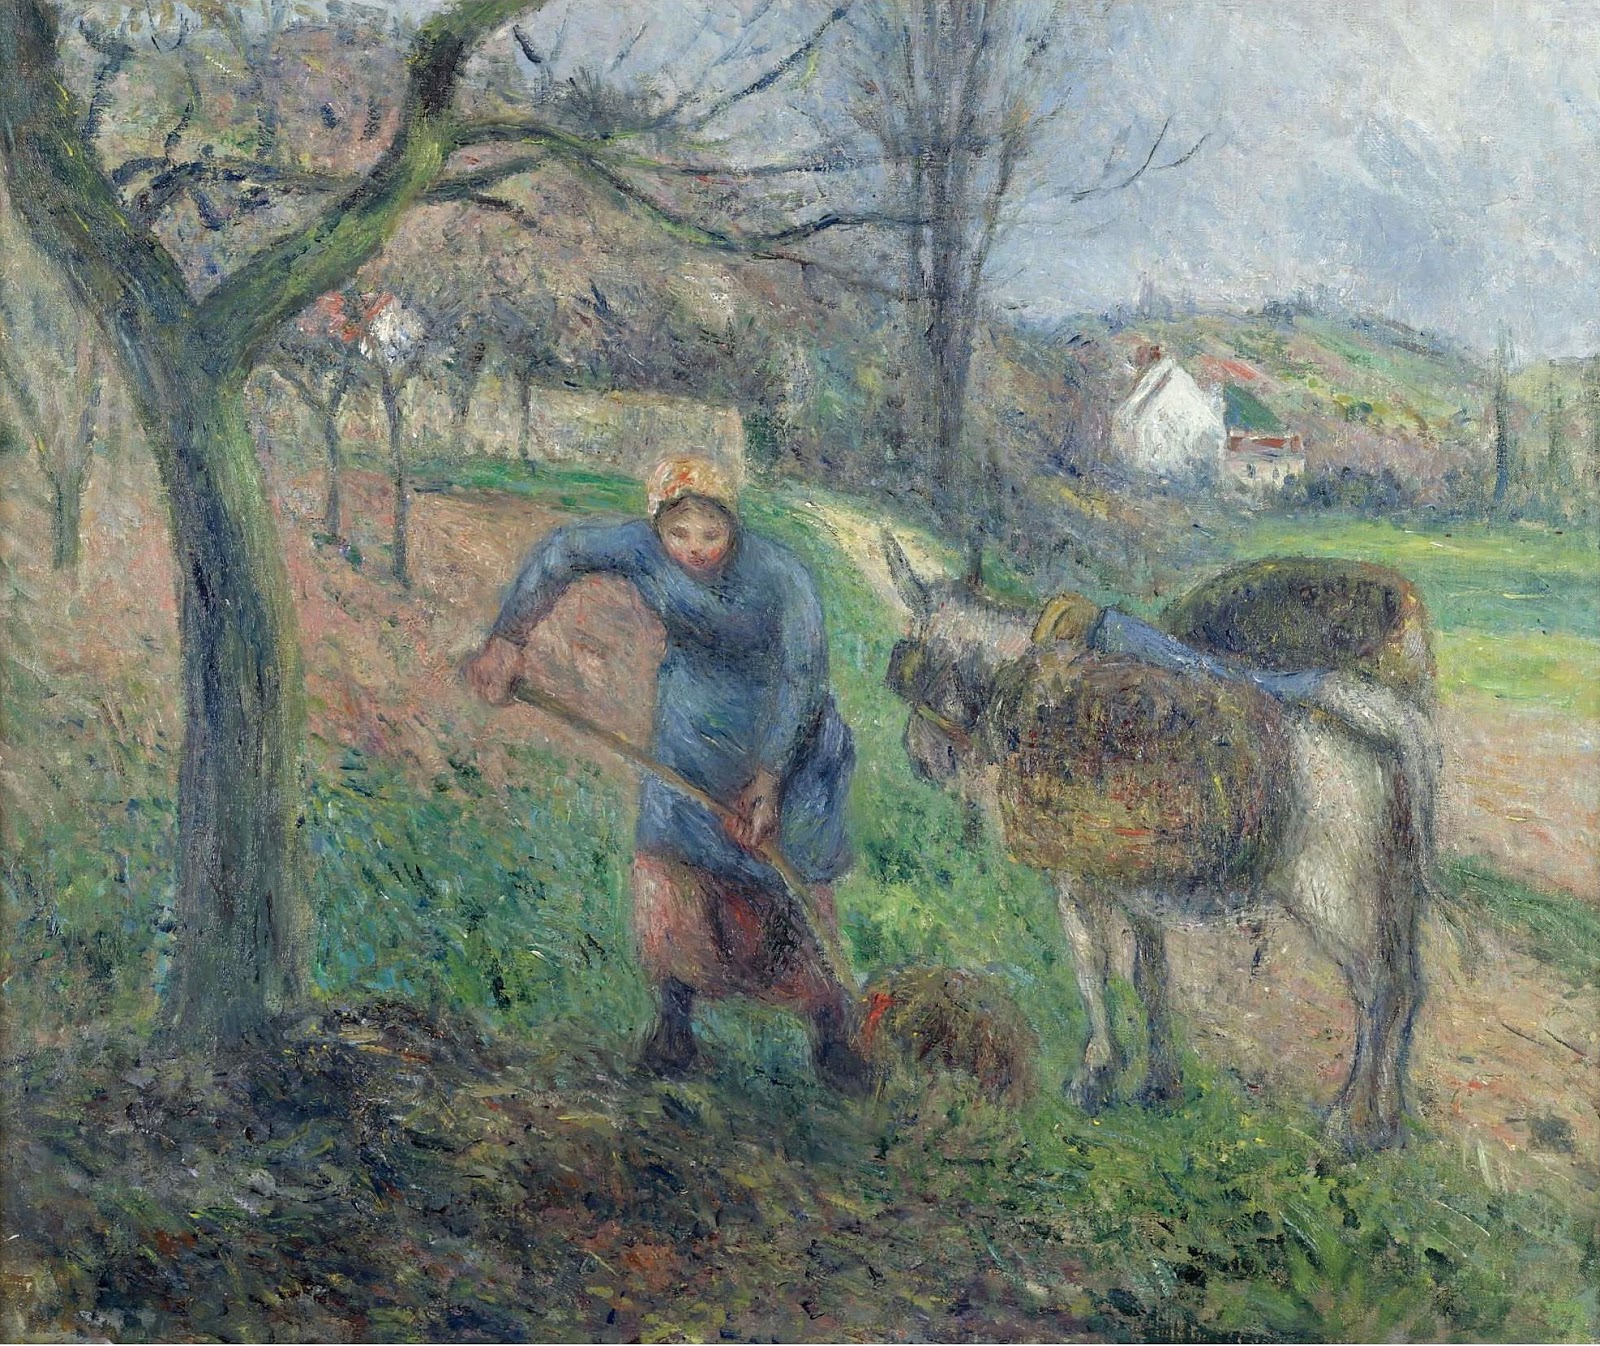 Camille+Pissarro-1830-1903 (397).jpg